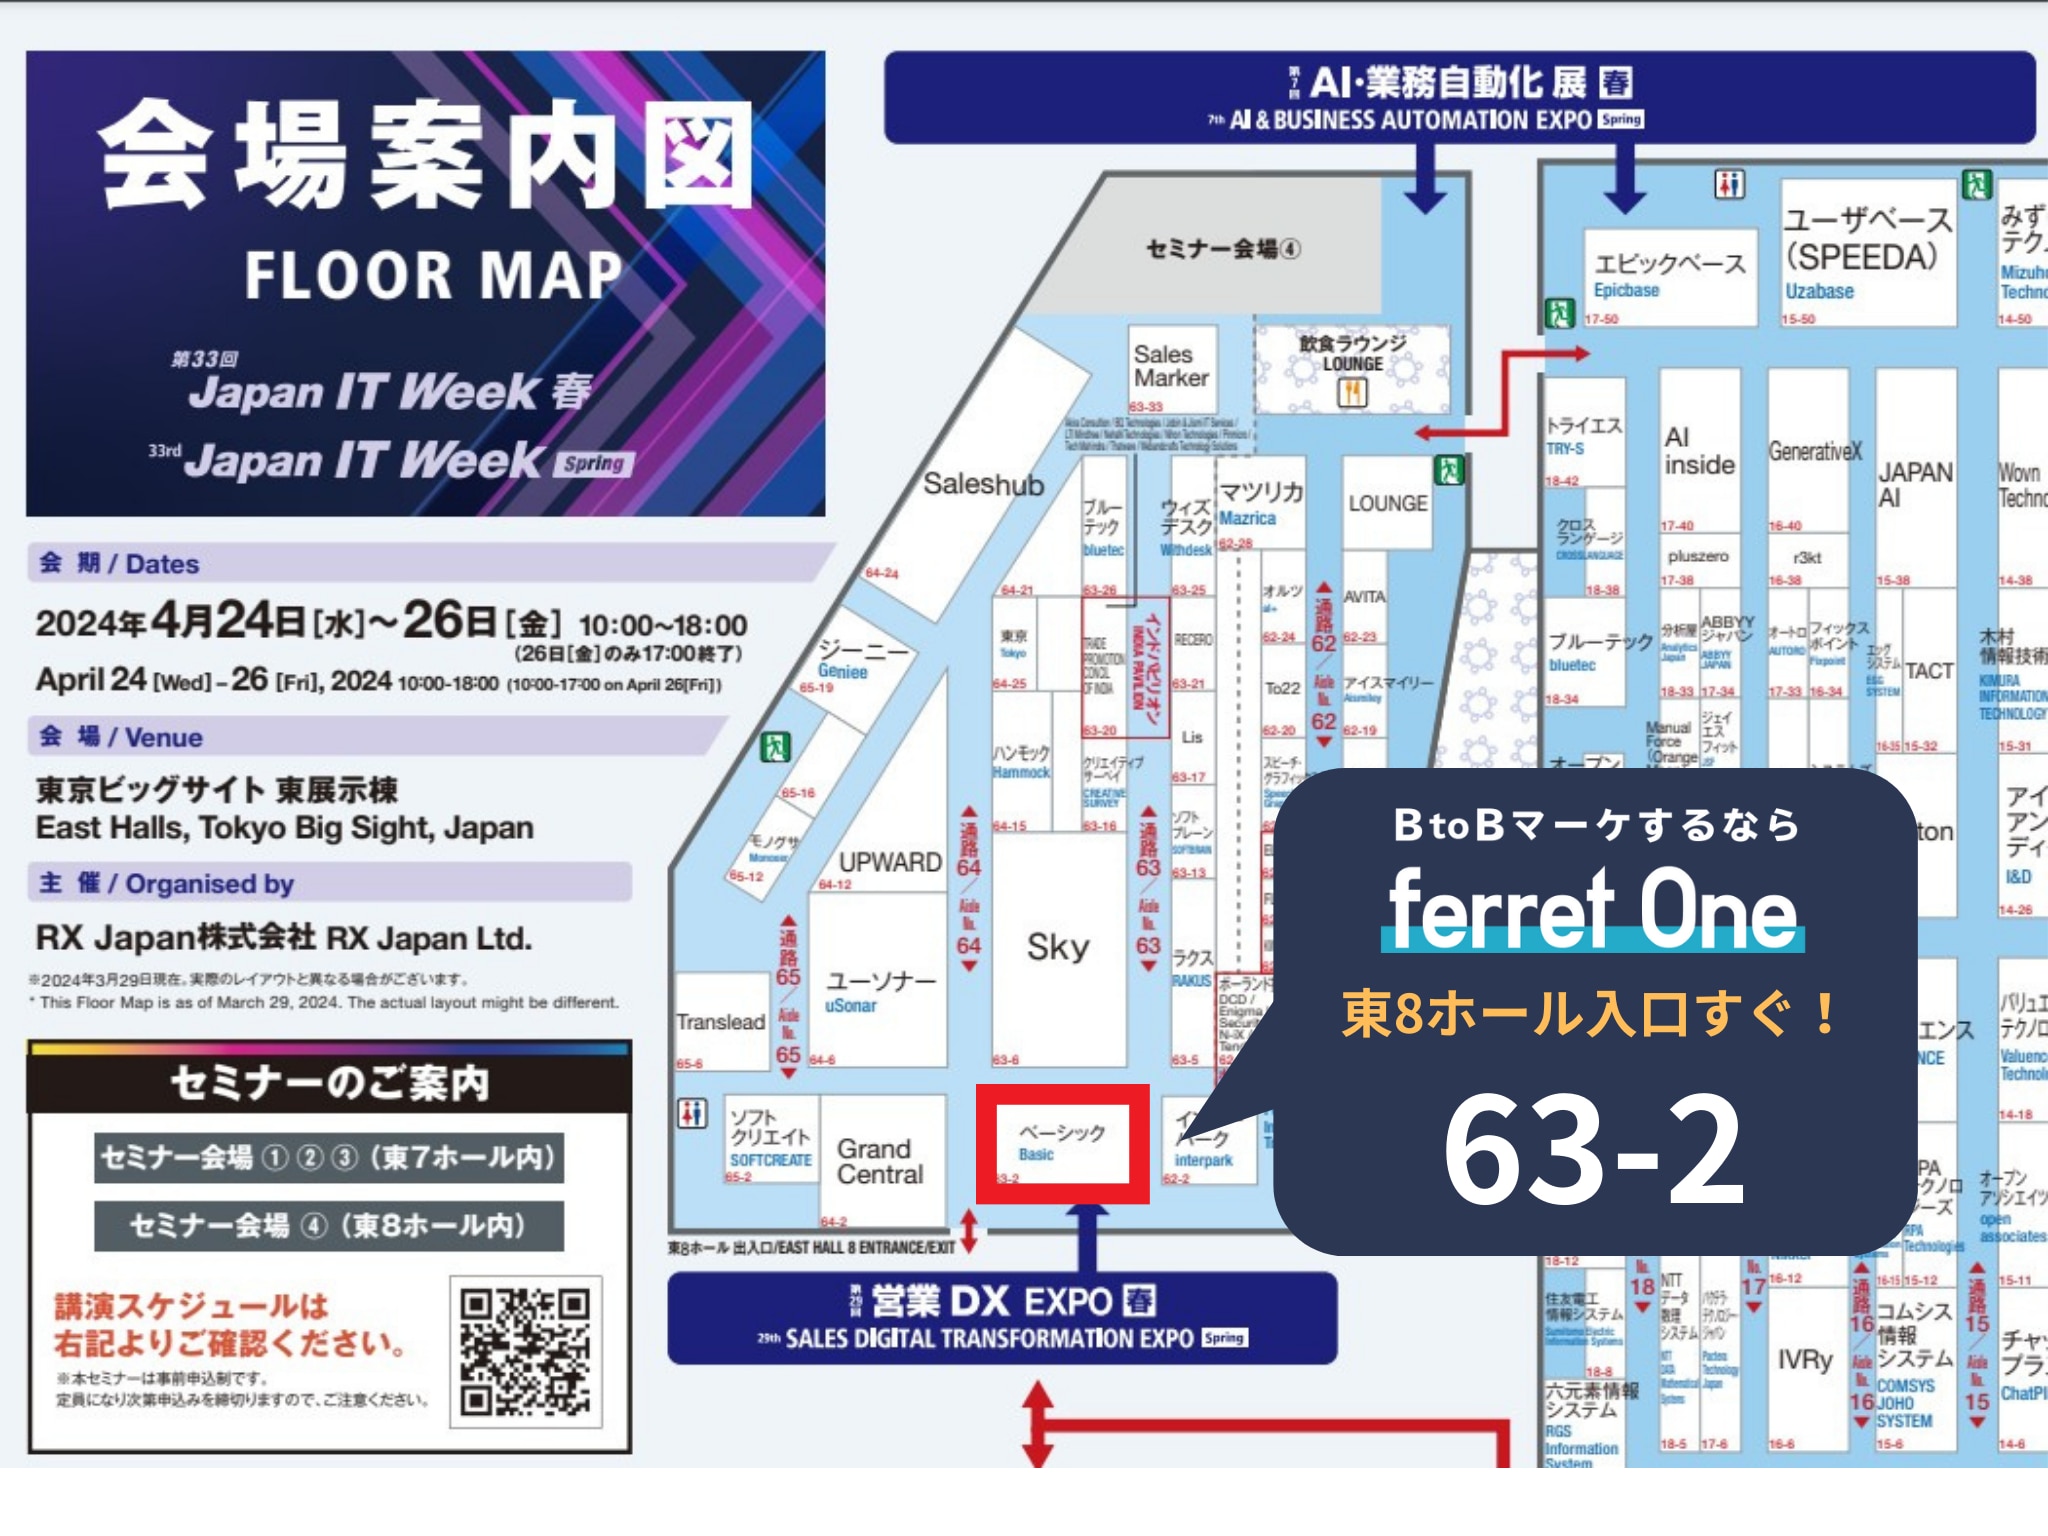 Japan IT Week ブースマップ　ferret Oneブース63-2